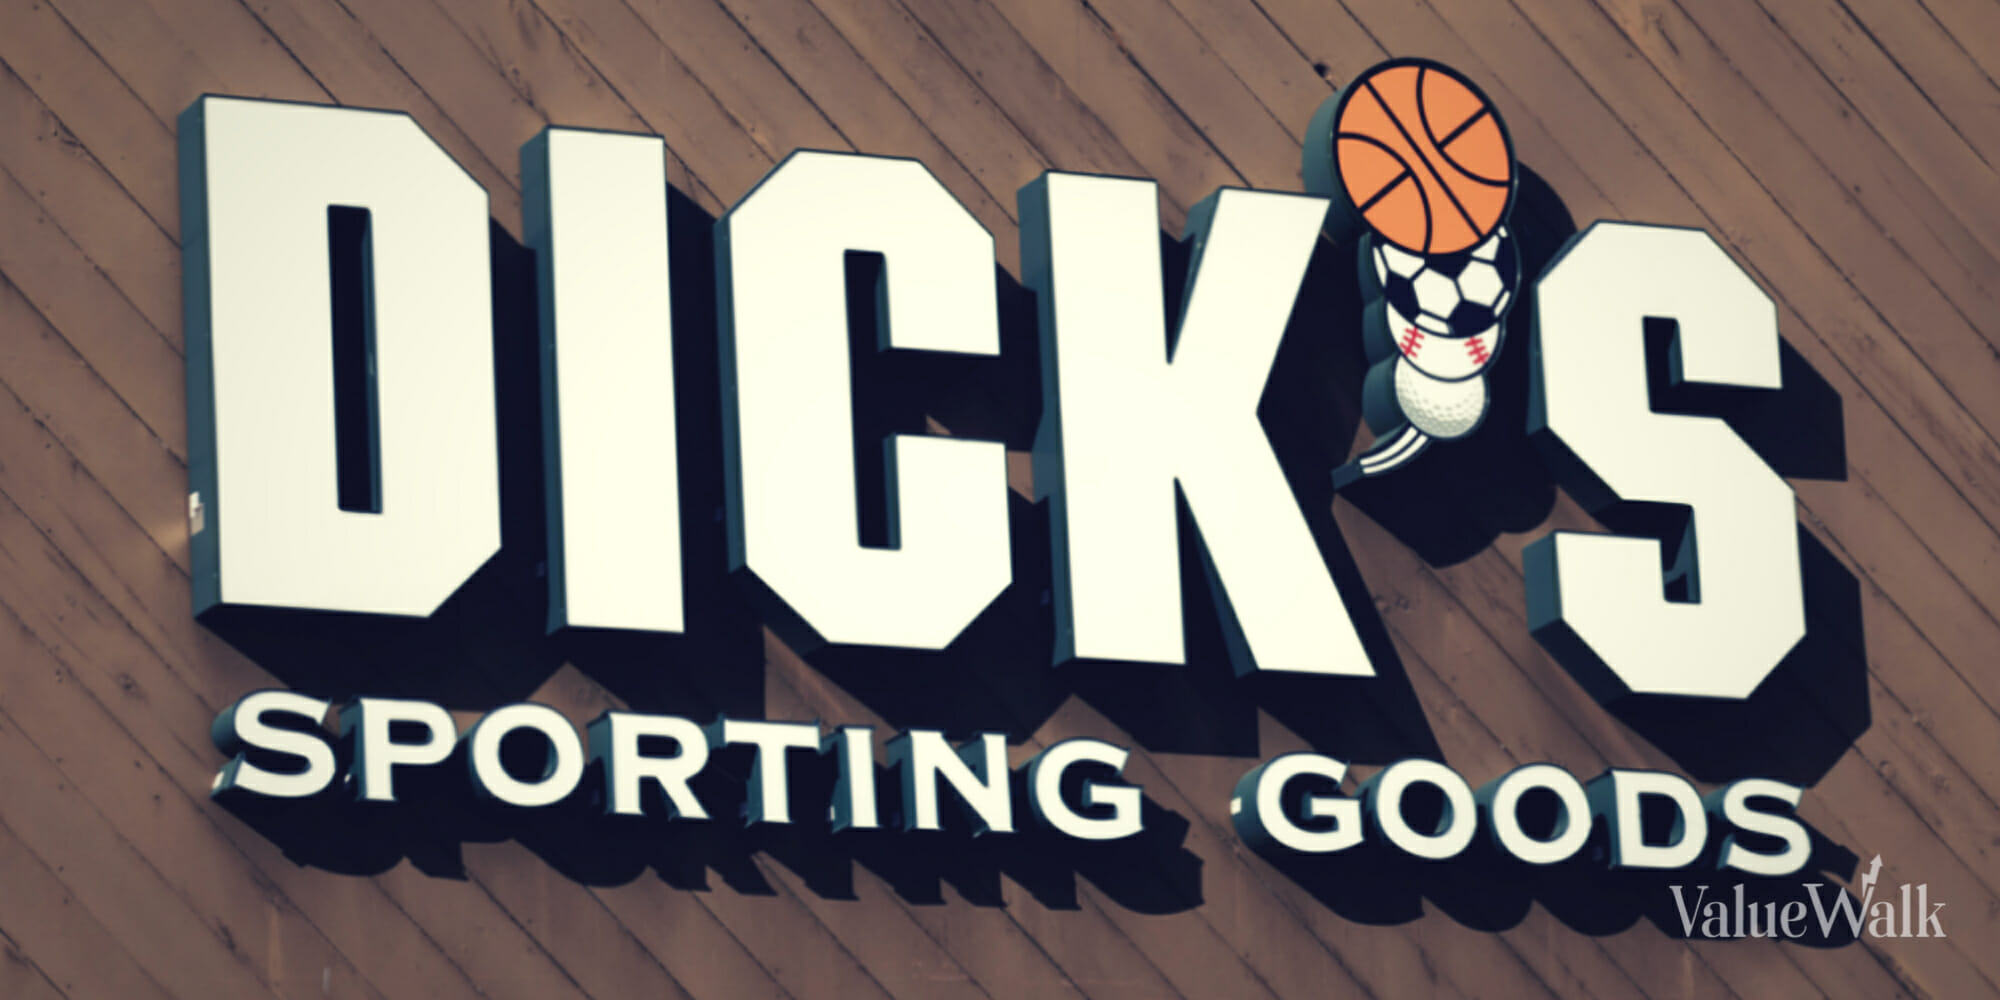 Up 48% YTD, Dick’s Sporting Goods Still Has Room To Run